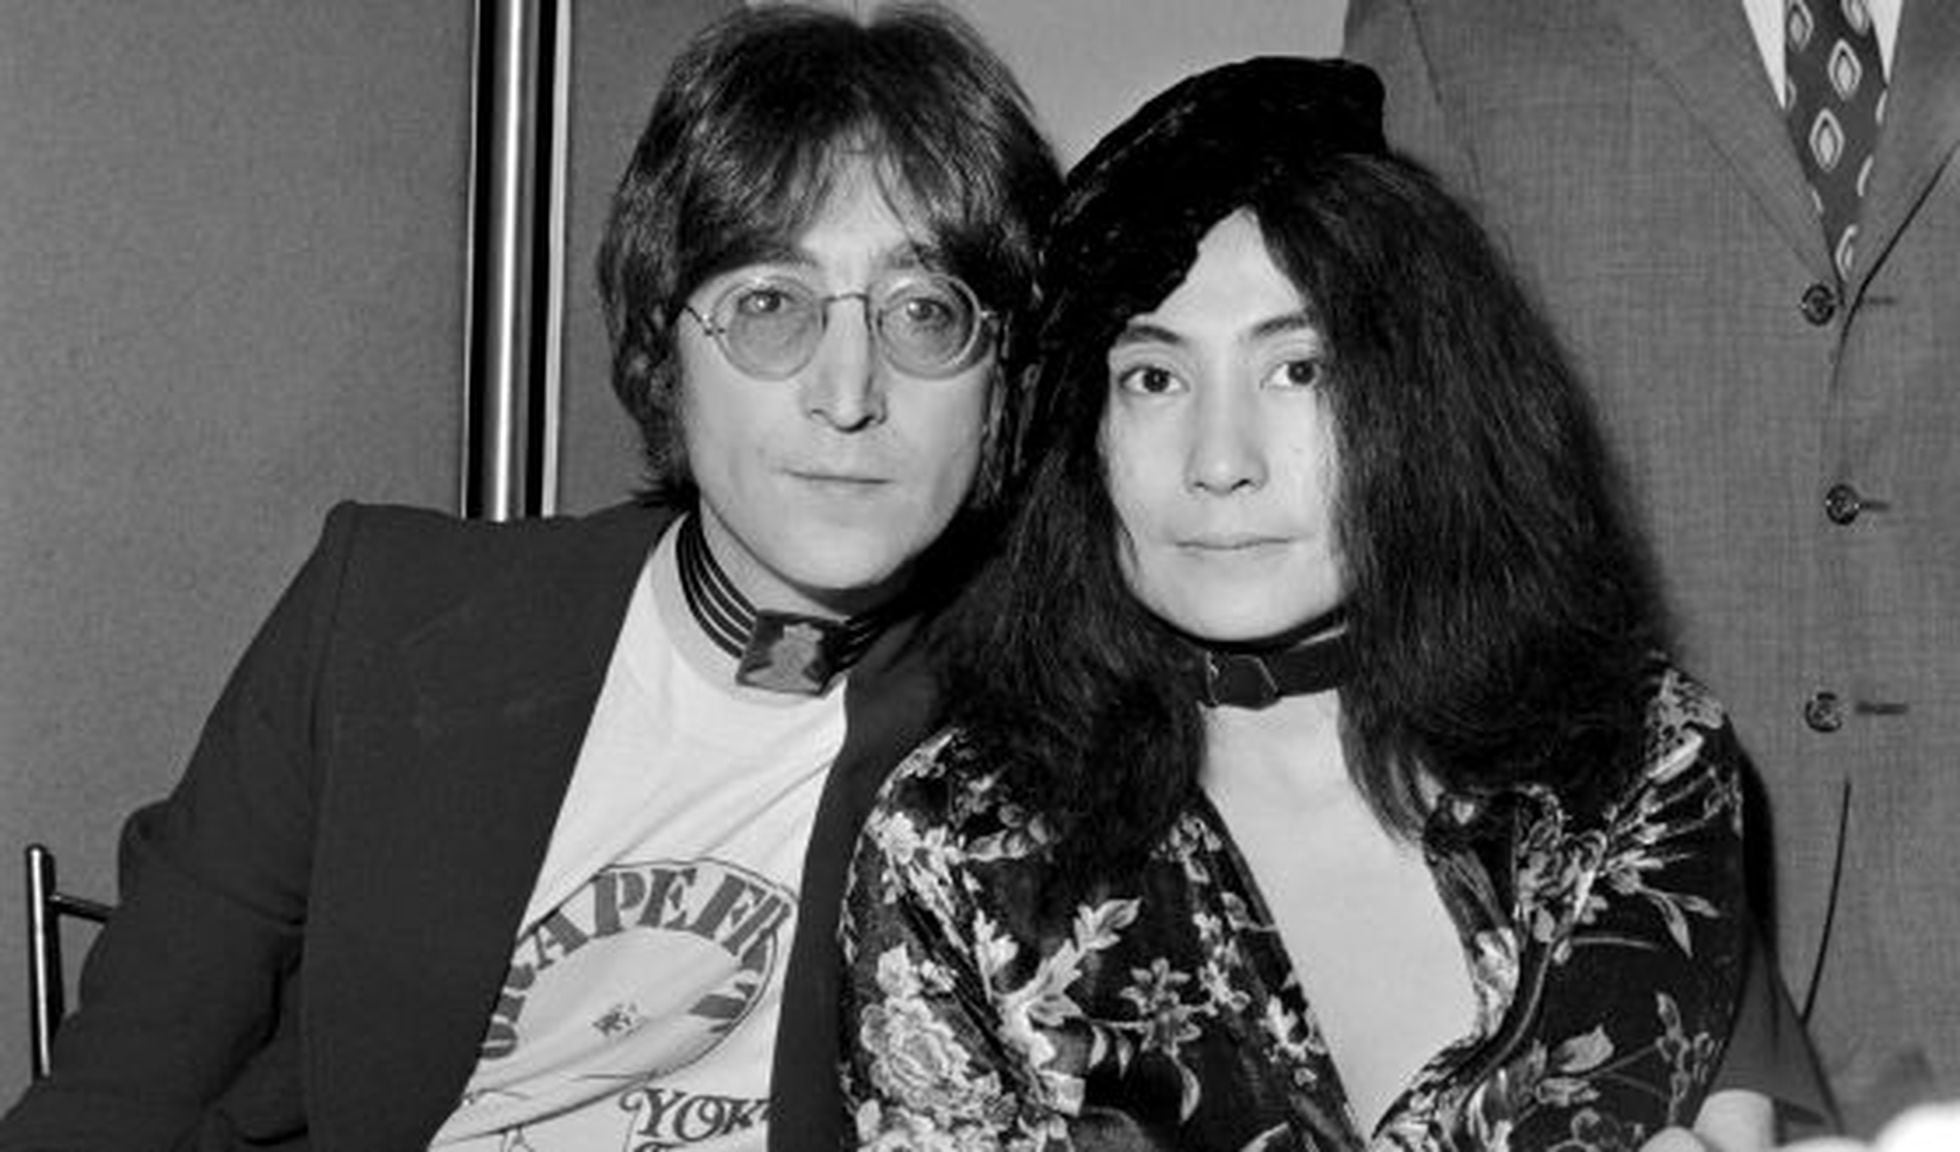 Вдова леннона. Джон Леннон и Йоко. Джон Леннон и Йоко оно. Жена Джона Леннона Йоко. Дети Джона Леннона и Йоко оно.